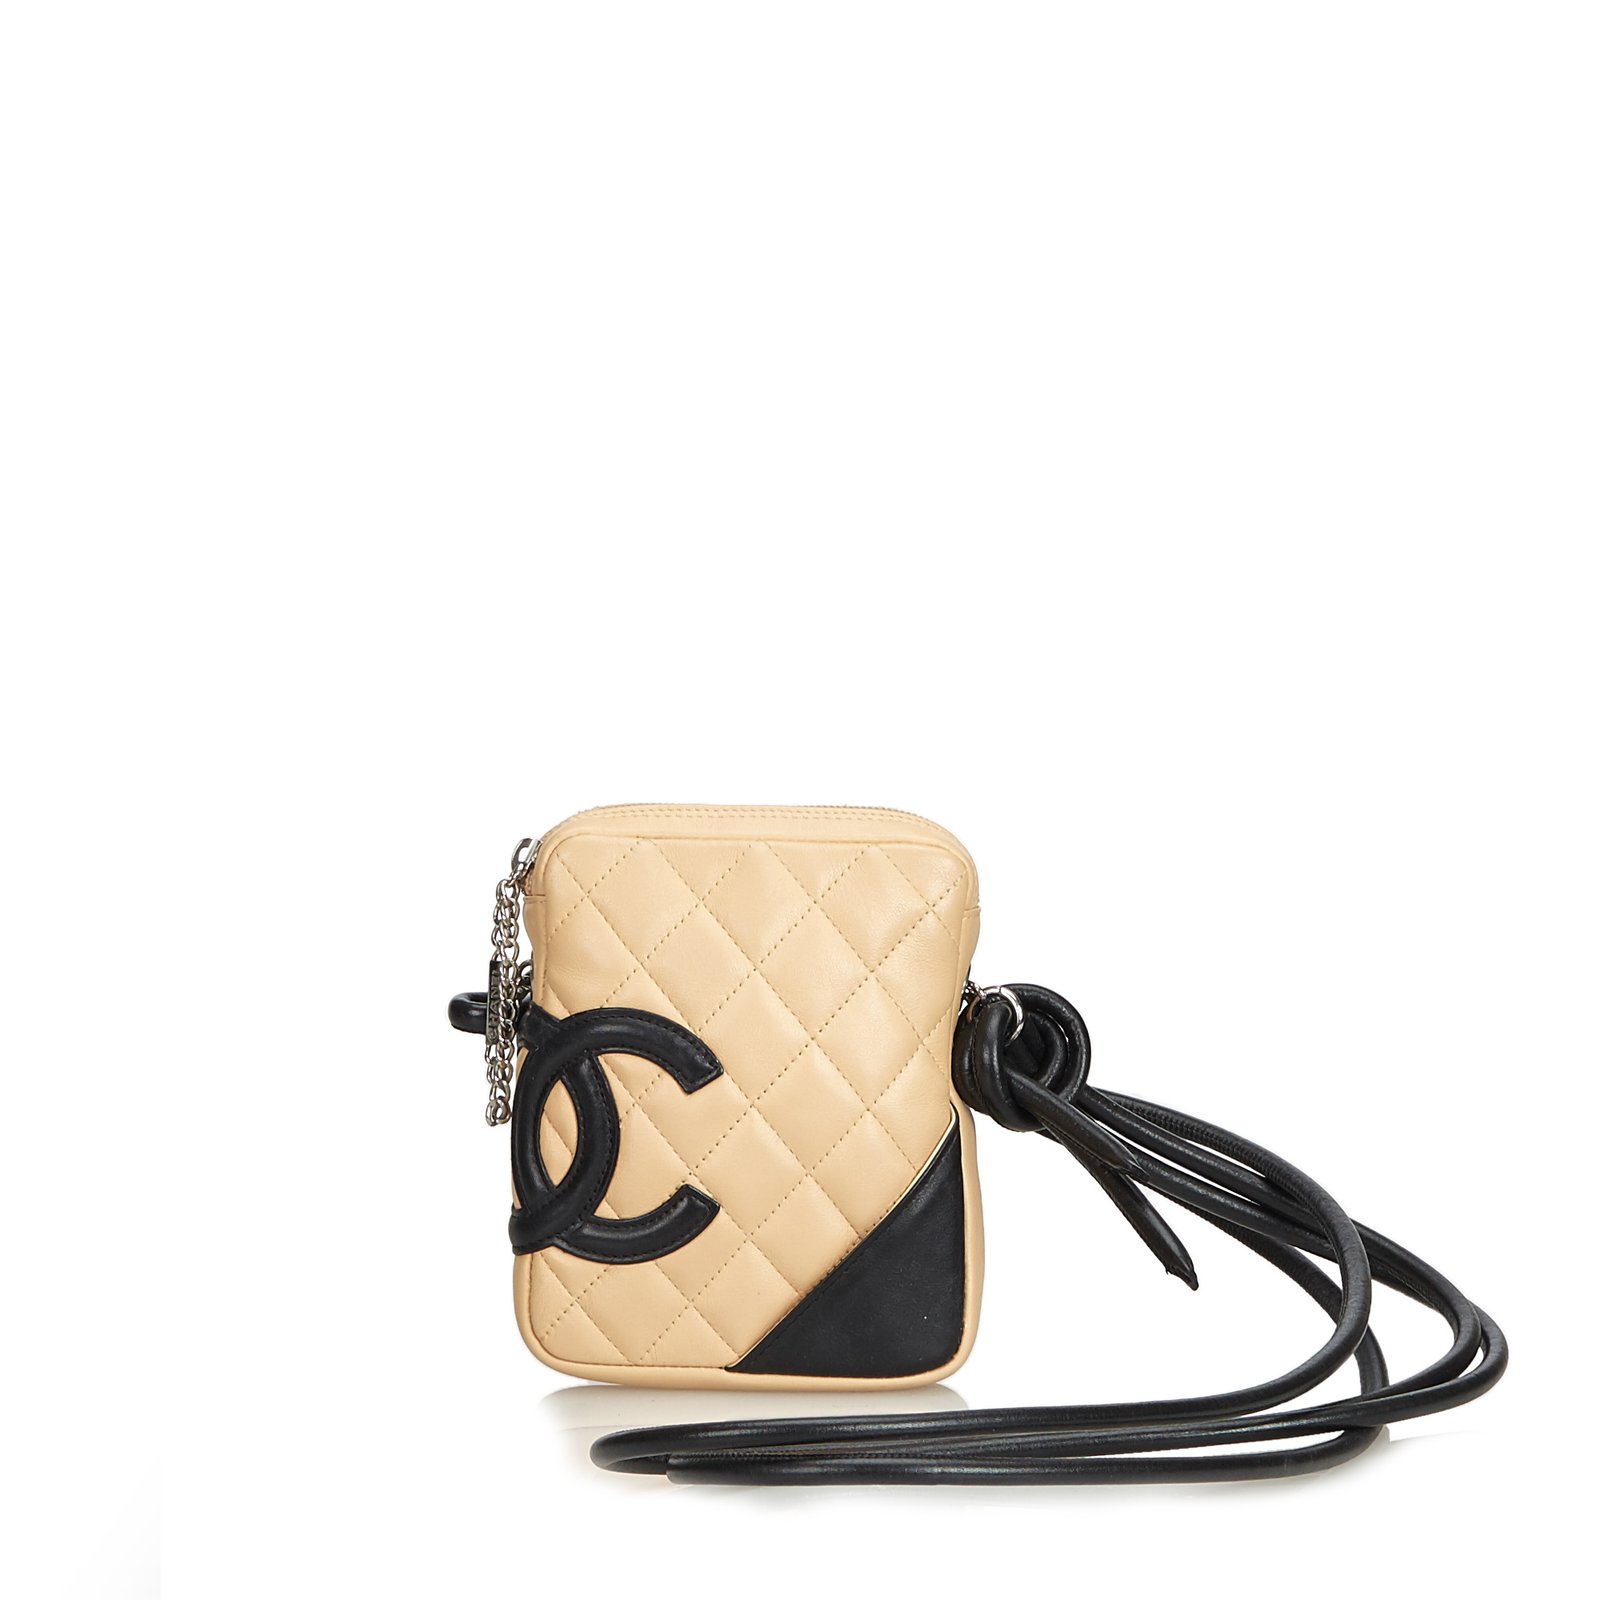 CHANEL  Bags  Chanel 3 Rue Cambon Bag Very Good Condition  Poshmark